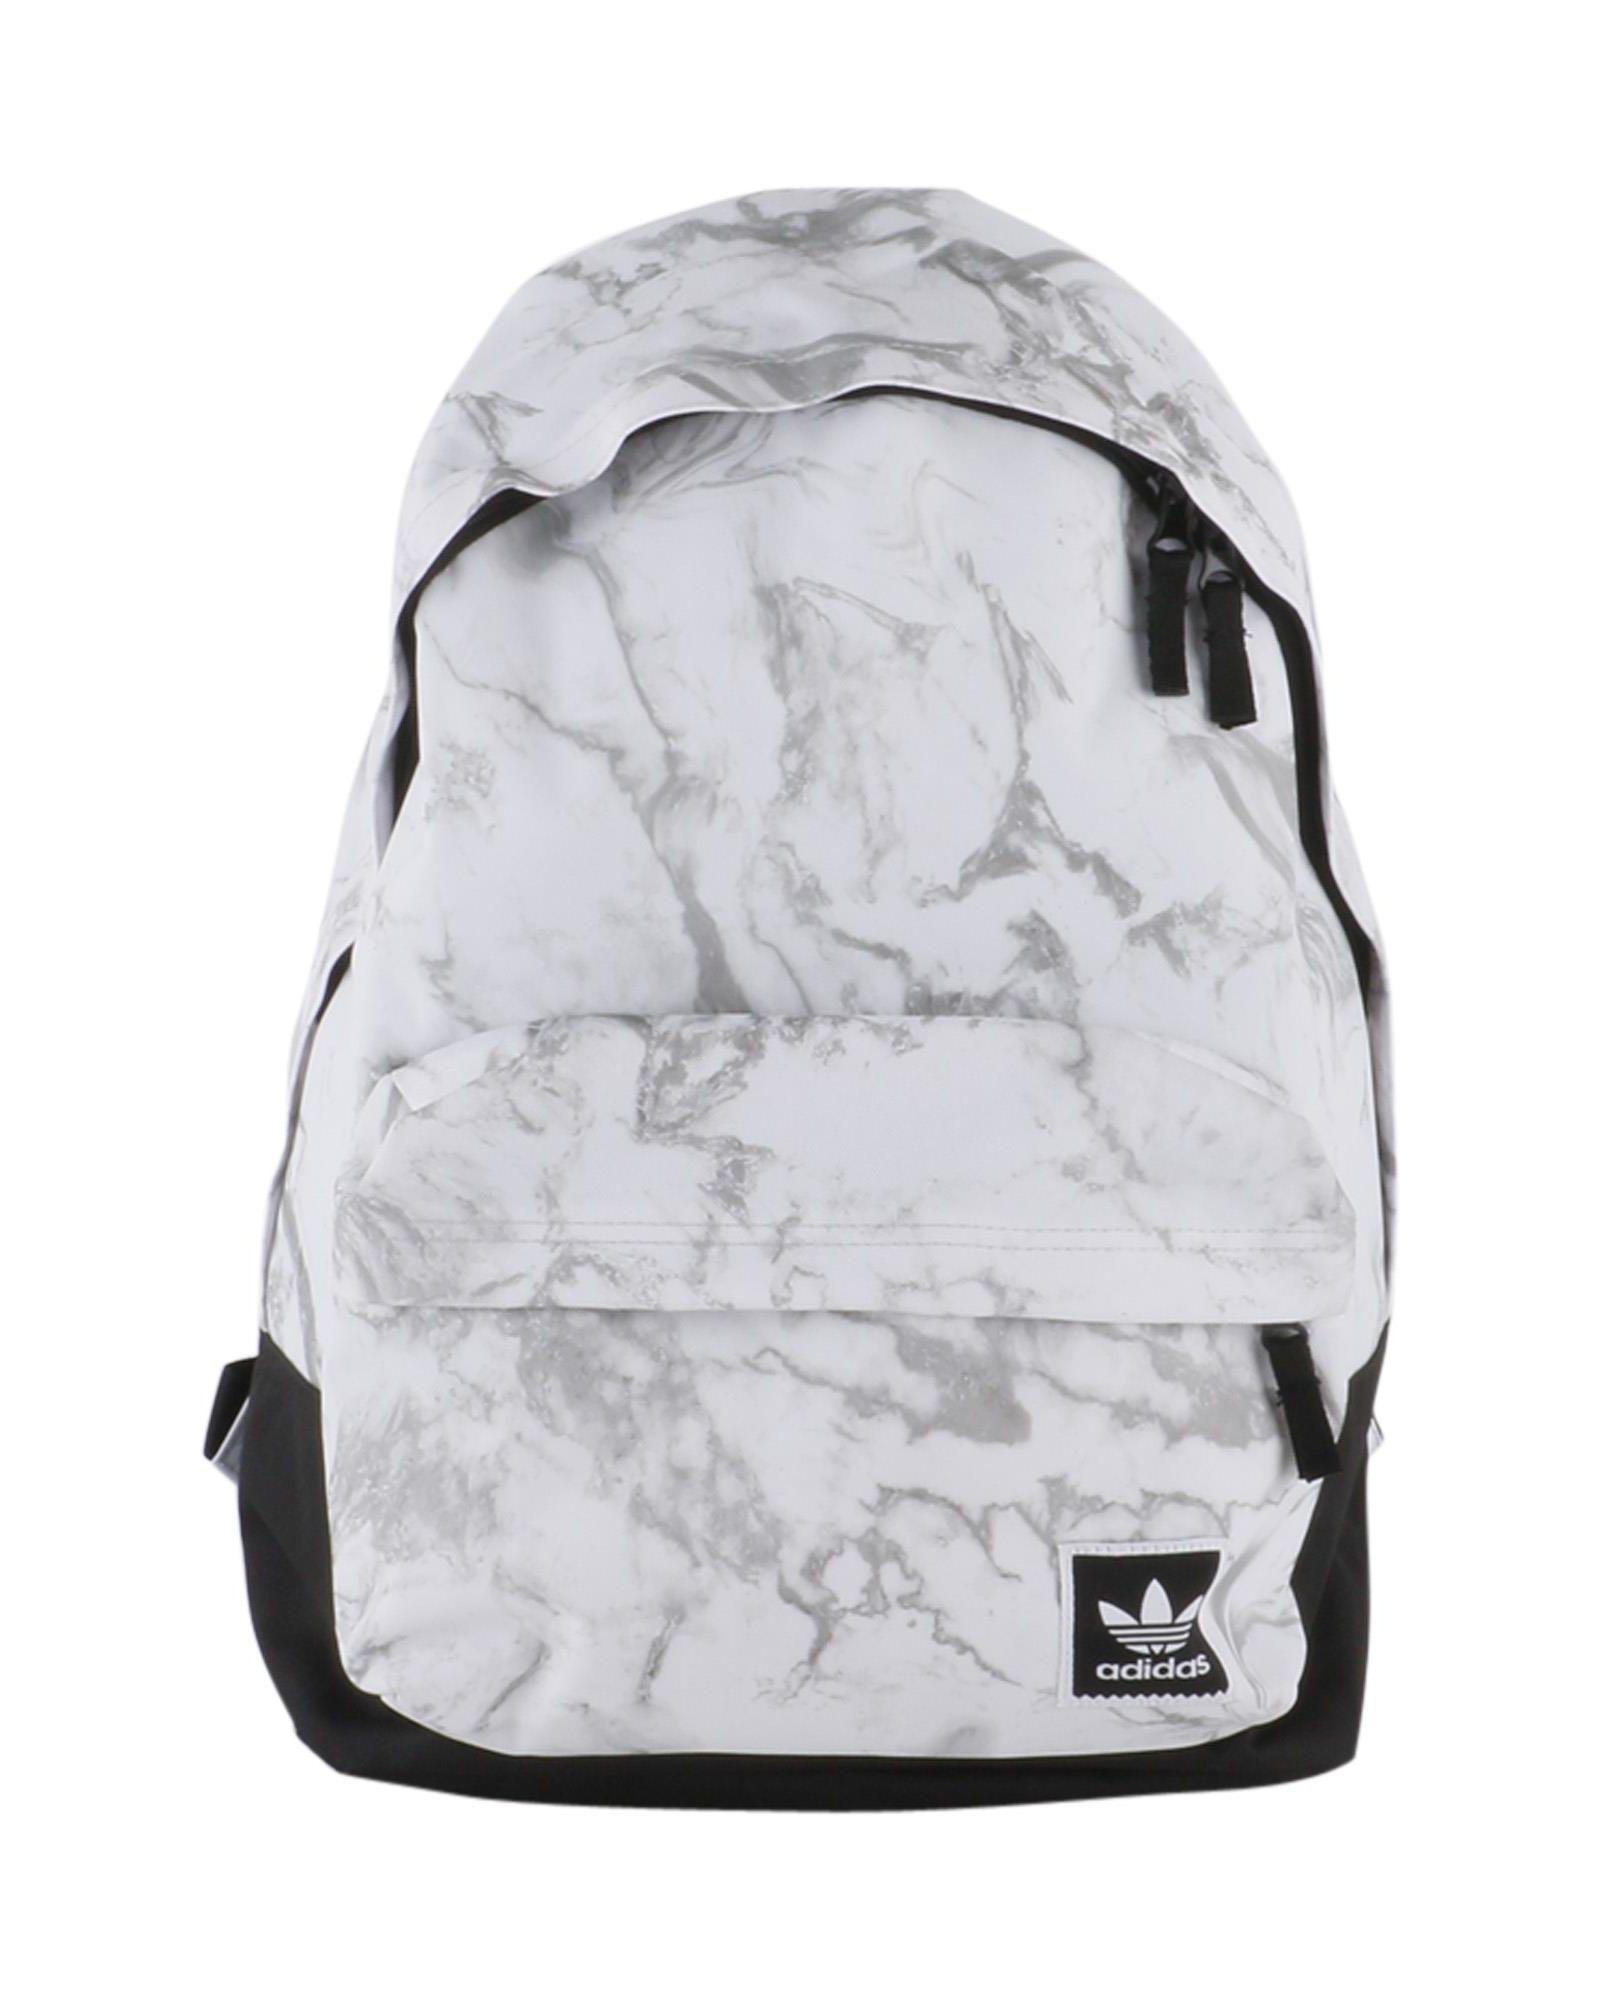 Adidas Originals Marble Backpack In 